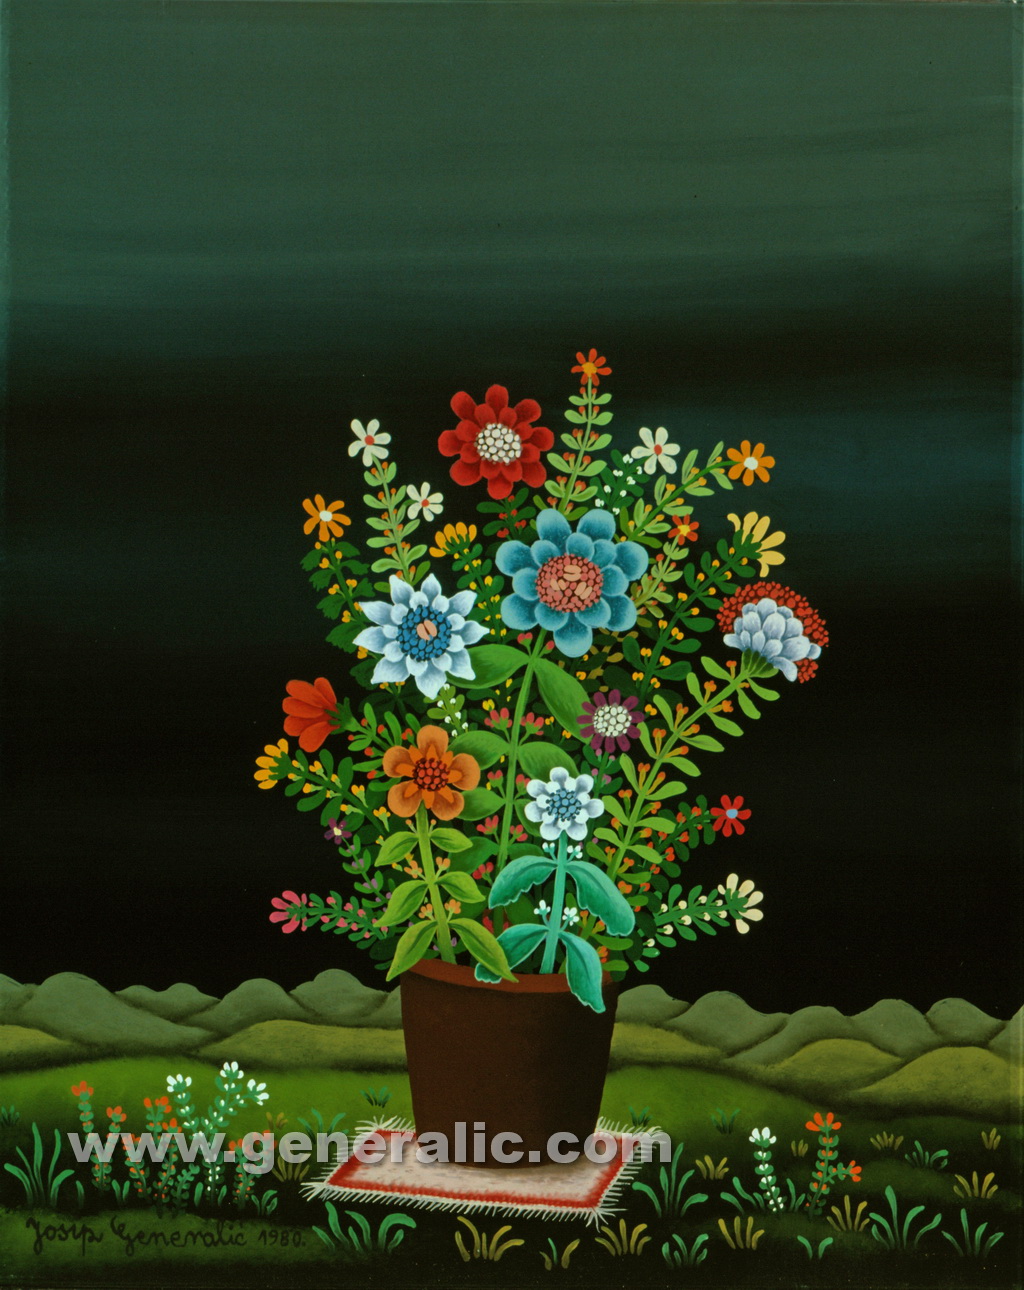 Josip Generalic, 1980, Flowers at night, oil on glass